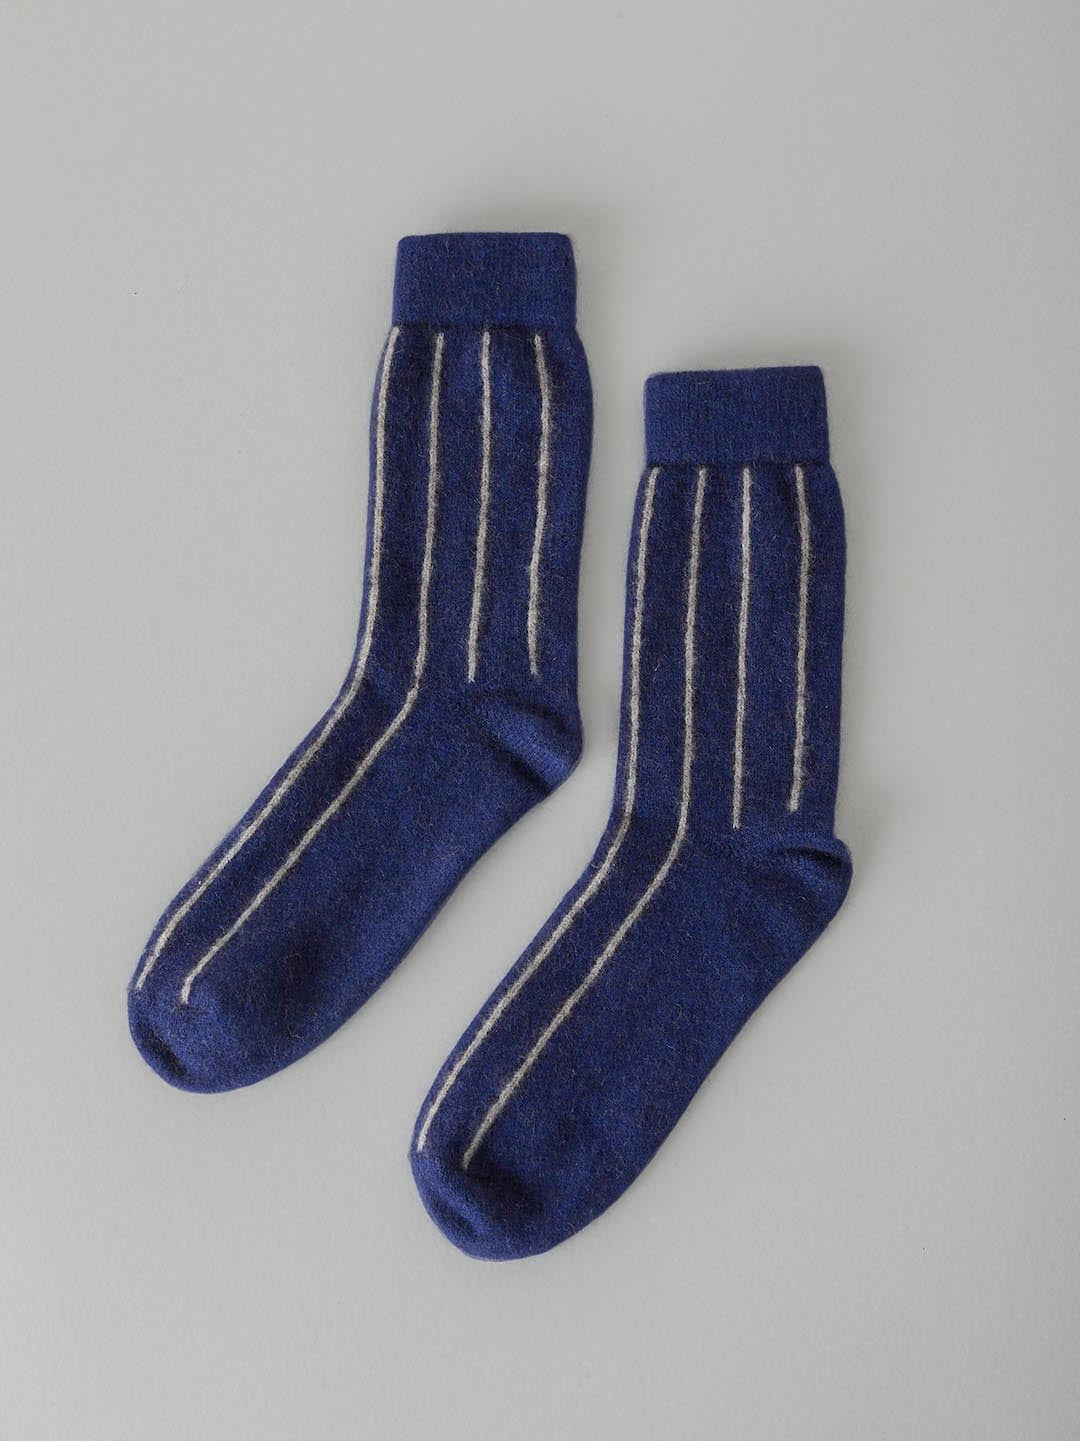 A pair of Francie Possum Merino Socks – Blue & Natural Stripe lying flat on a light gray surface.